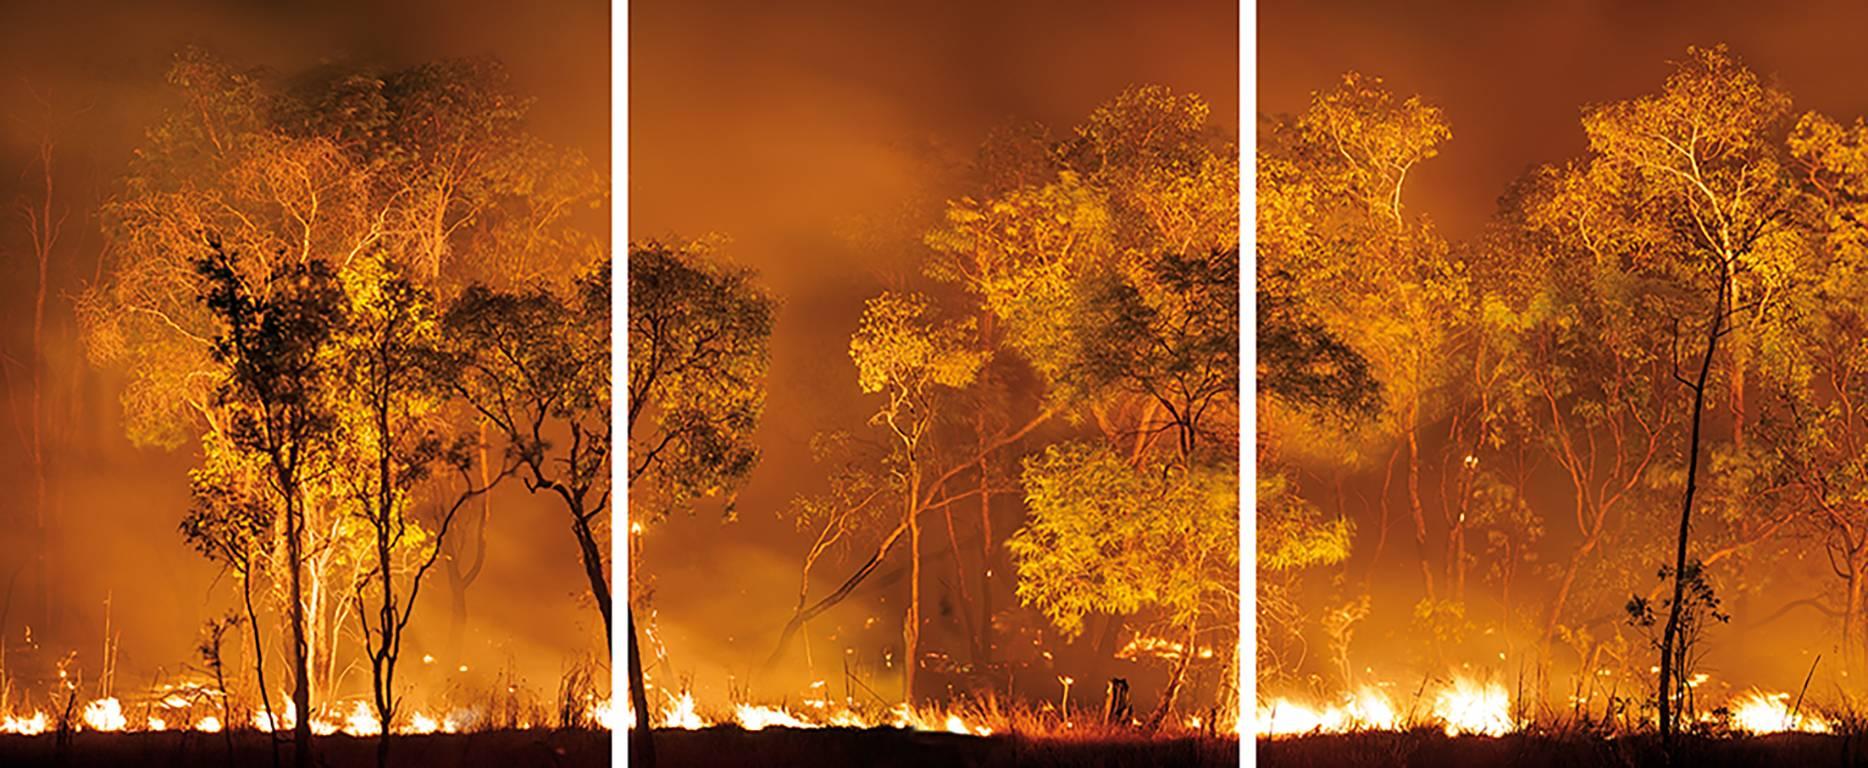 Olaf Otto Becker Landscape Print - Bushfire Lit to Clear Land, Australia, 2008